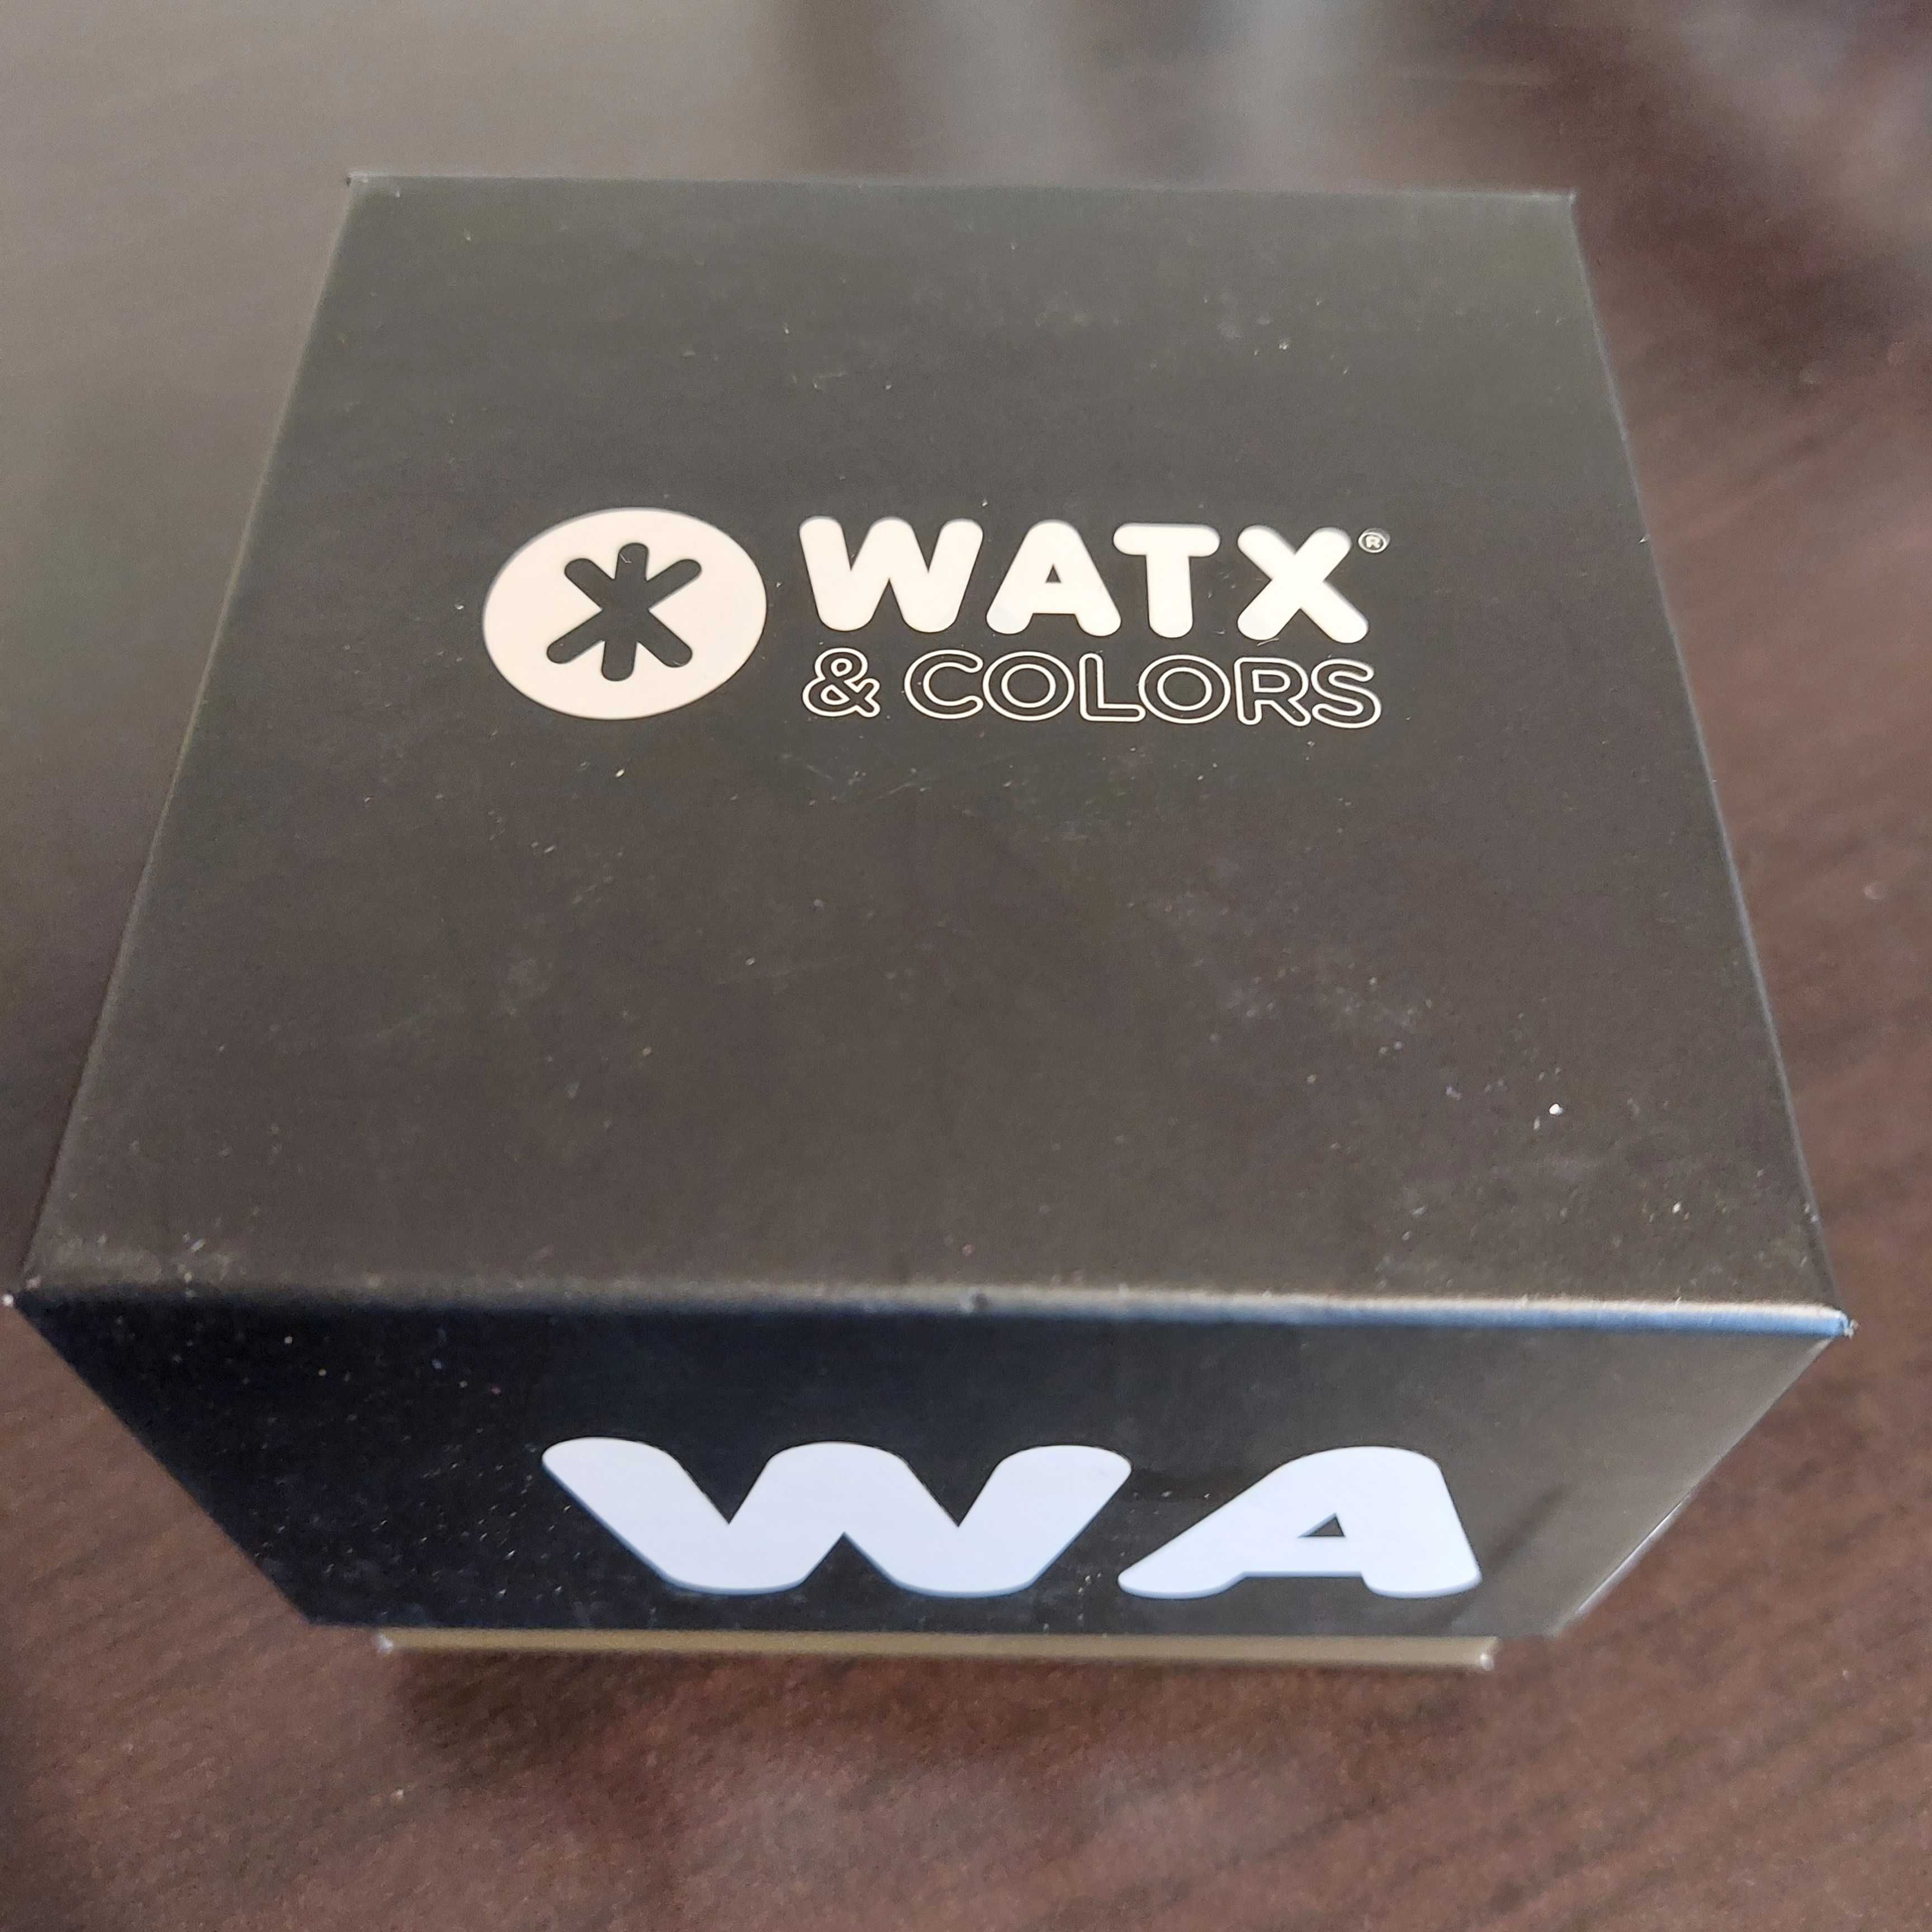 Relógio WATX&Colors - Hammer Hawai